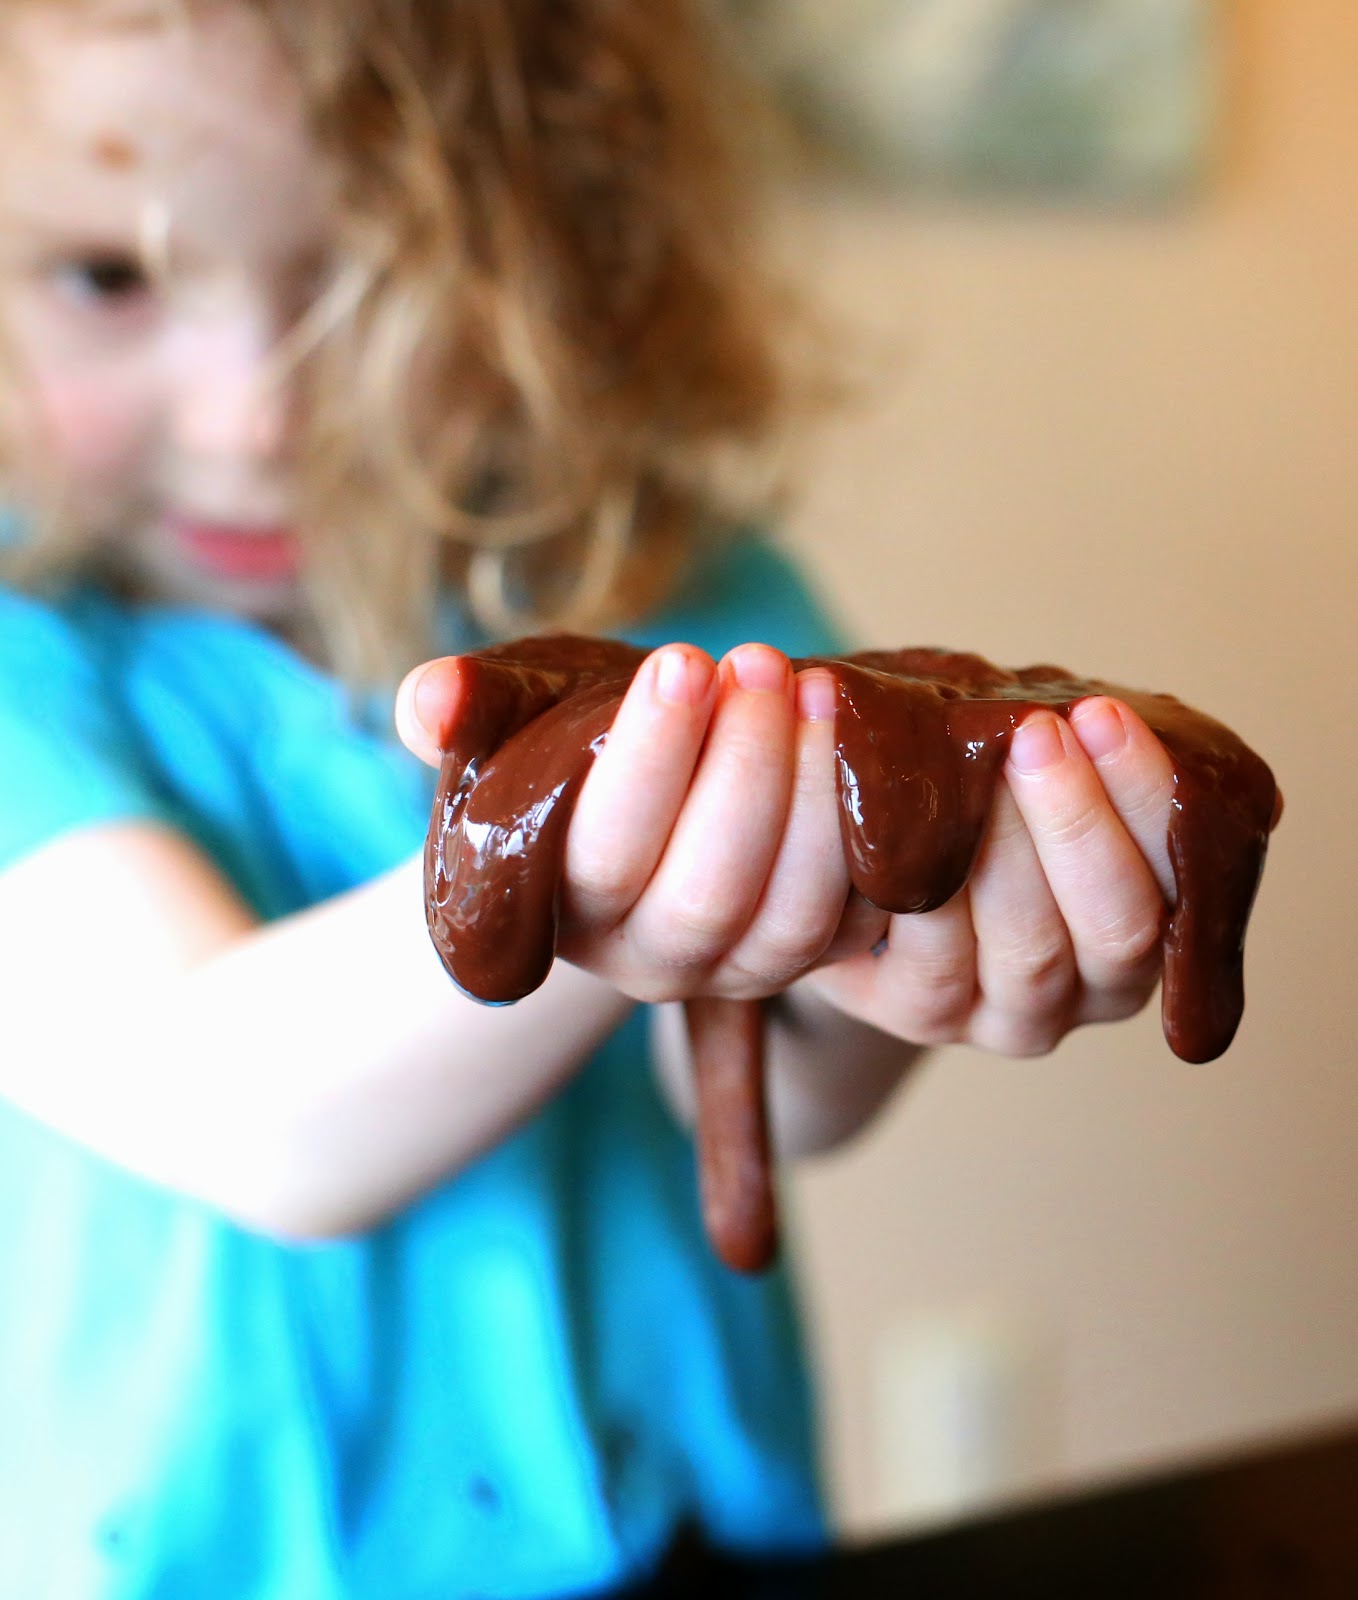 Лизун с ароматом шоколада-тягучая субстанция в руках ребенка